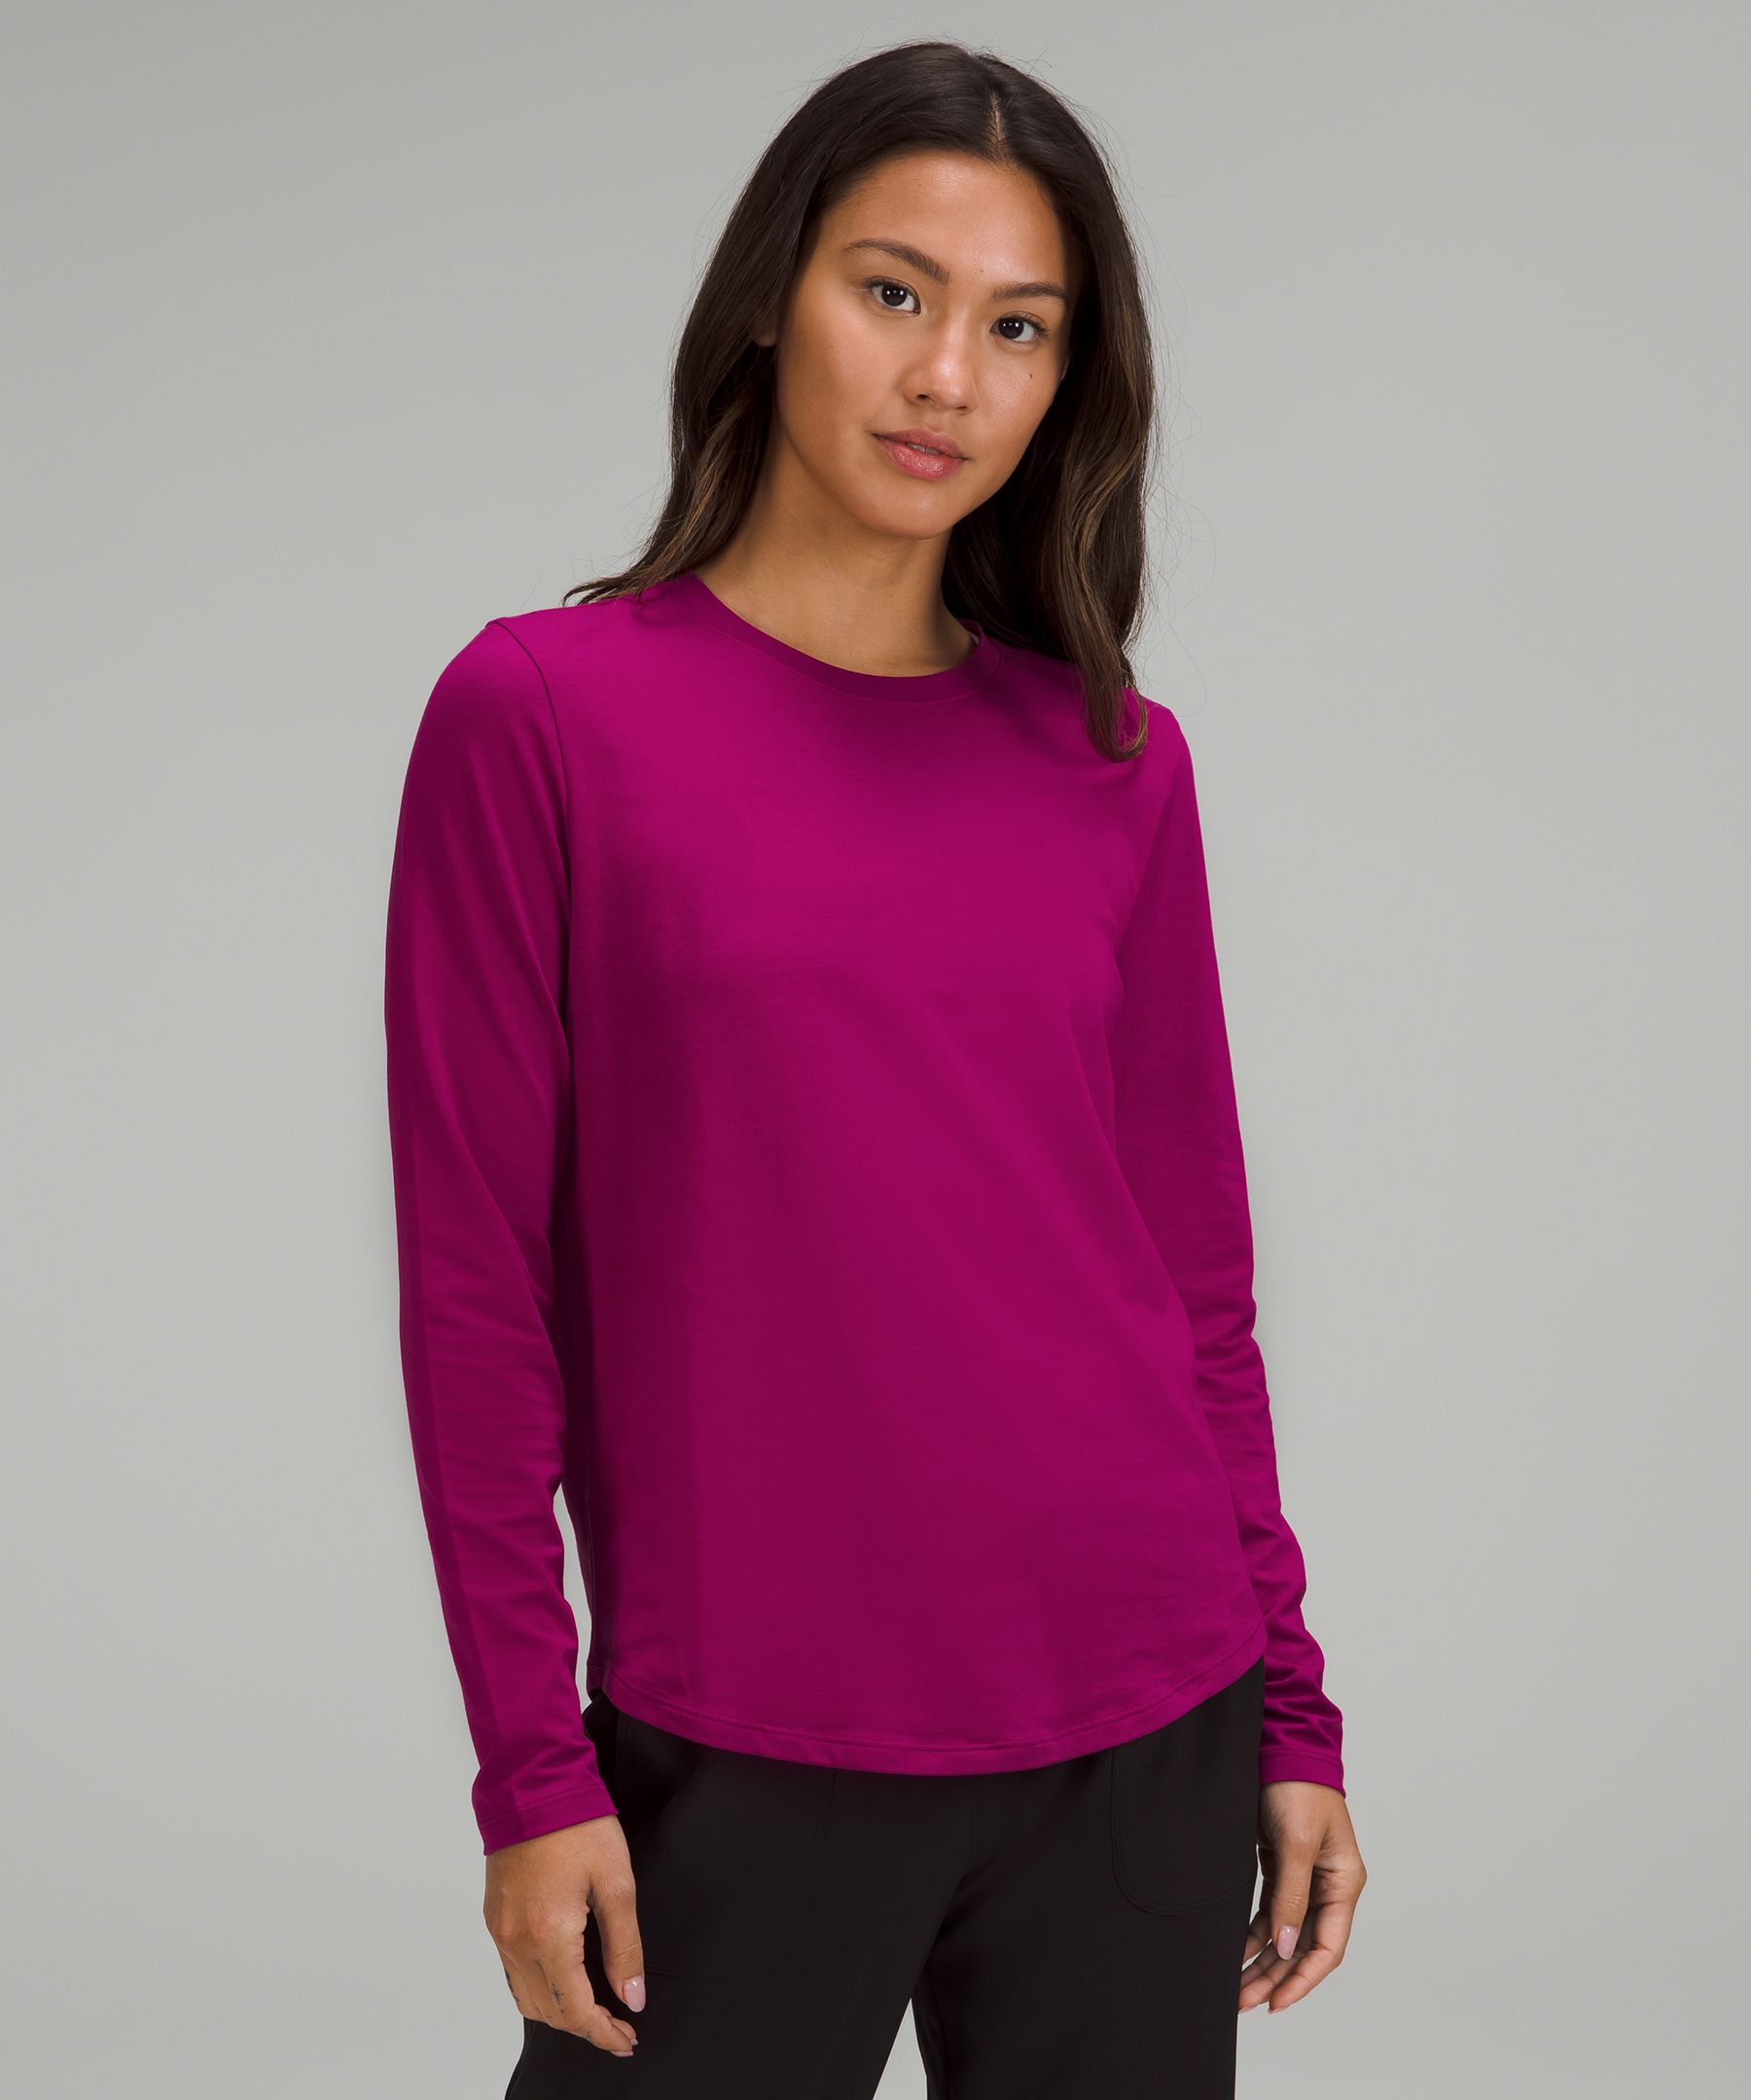 Lululemon Love Long Sleeve Shirt In Magenta Purple